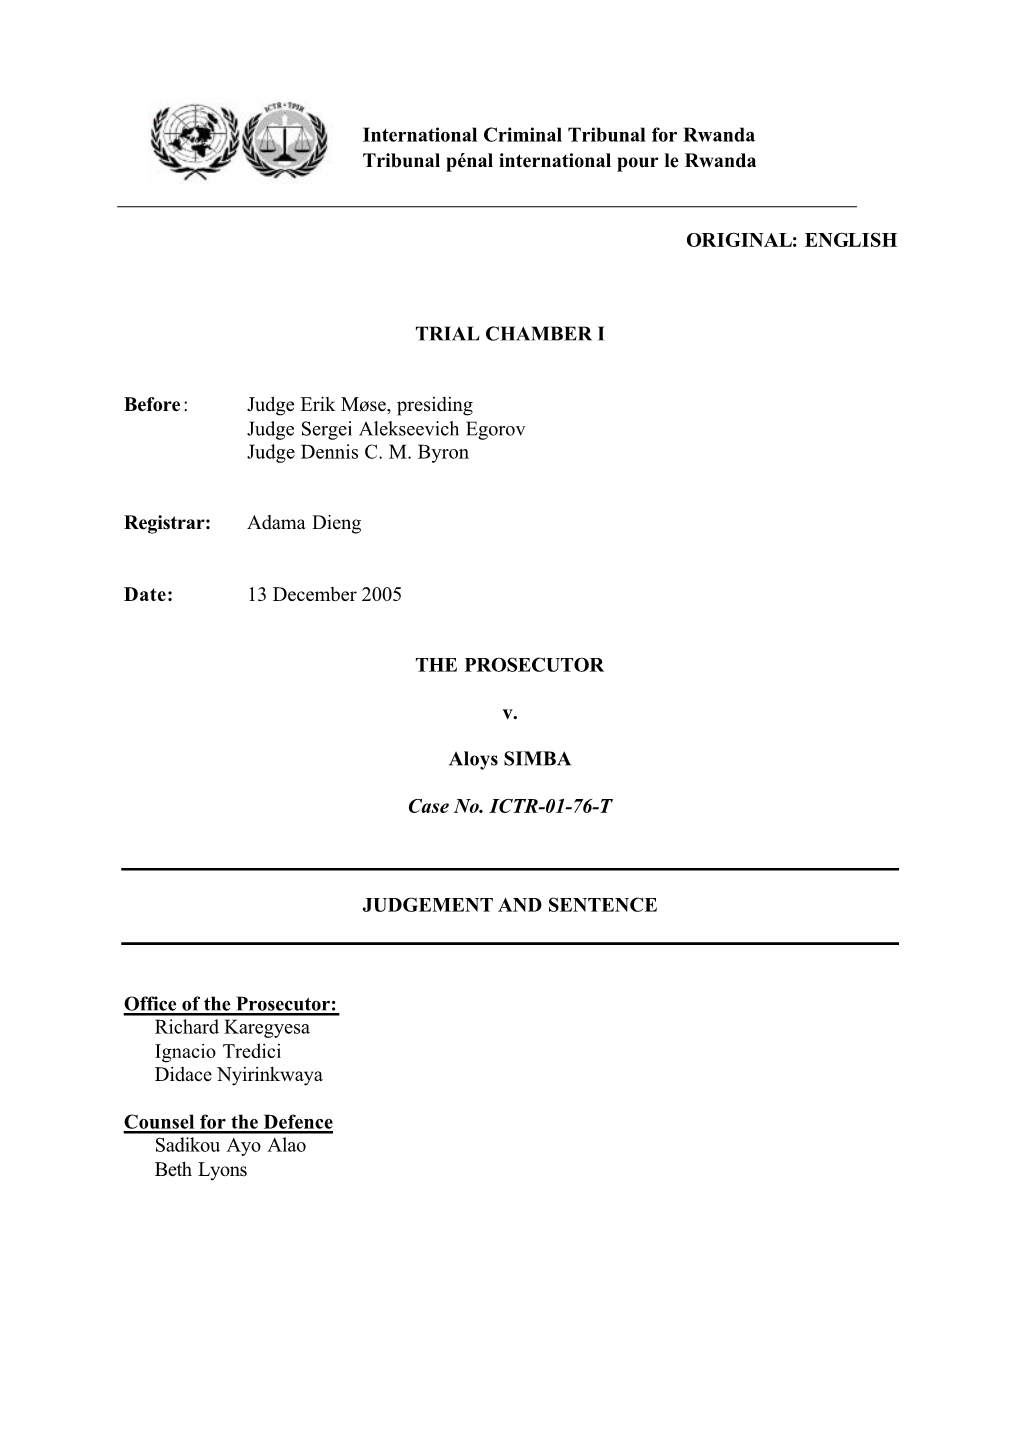 Prosecutor V. Simba, Case No. ICTR-01-76-T, Judgment and Sentence